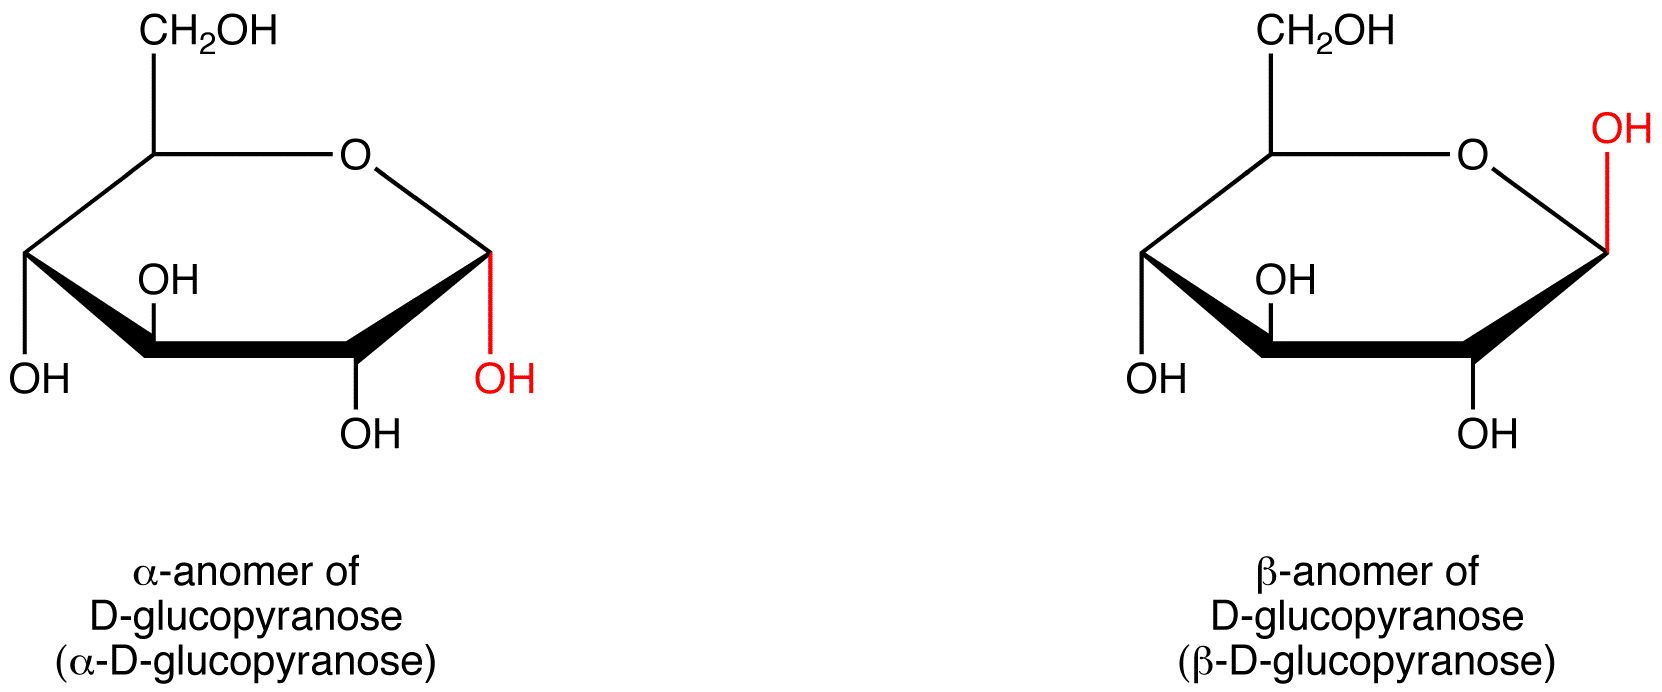 alphaanomers1.png